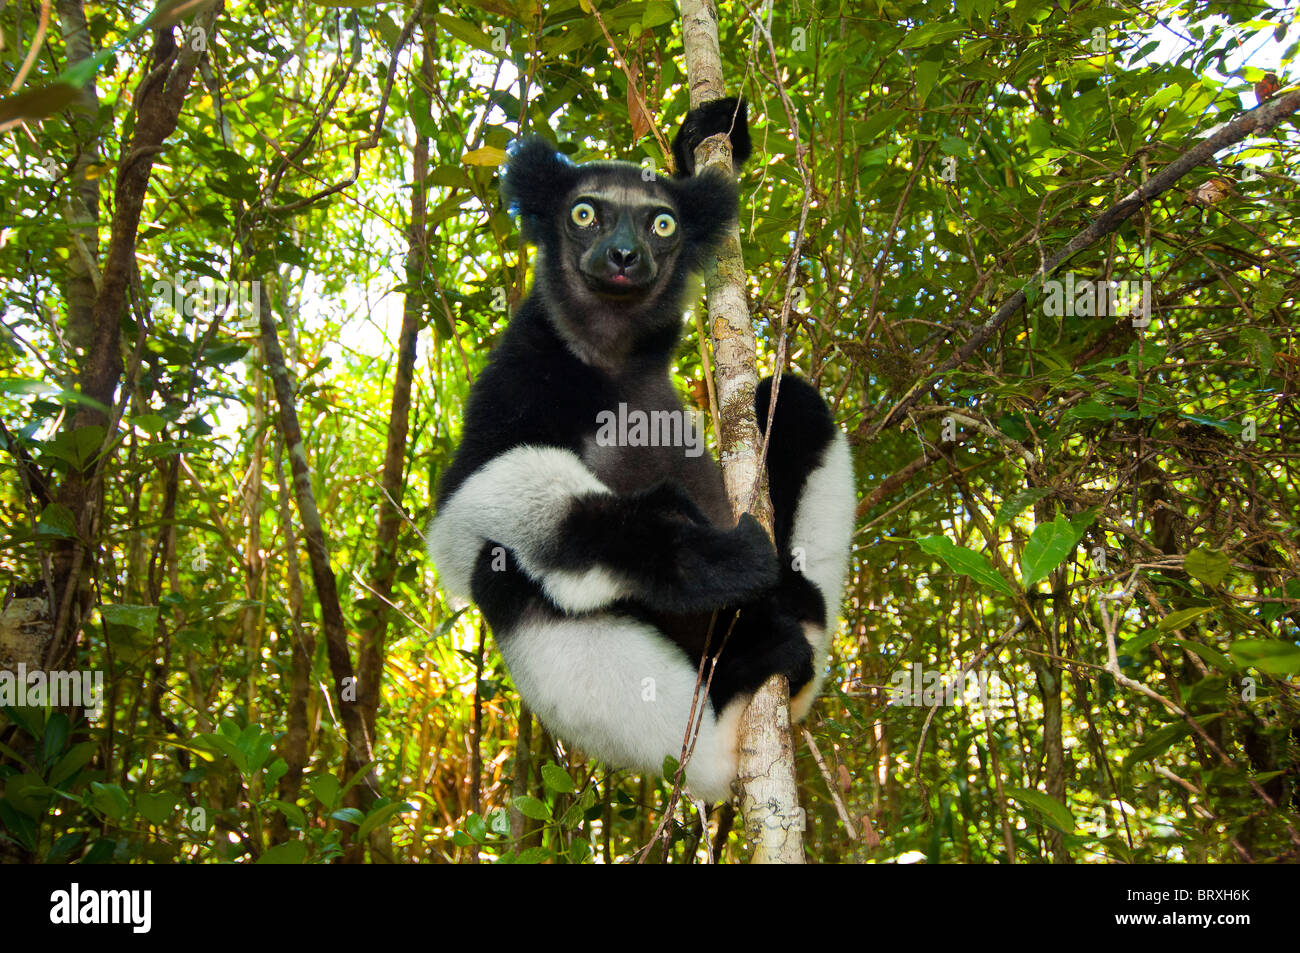 Lemur Tierwelt Diadem Sifaka Propithecus Diadema Edwardsi Madagaskar Madagaskar Lemuren wilden Wald Regenwald Baum Halbaffen Stockfoto